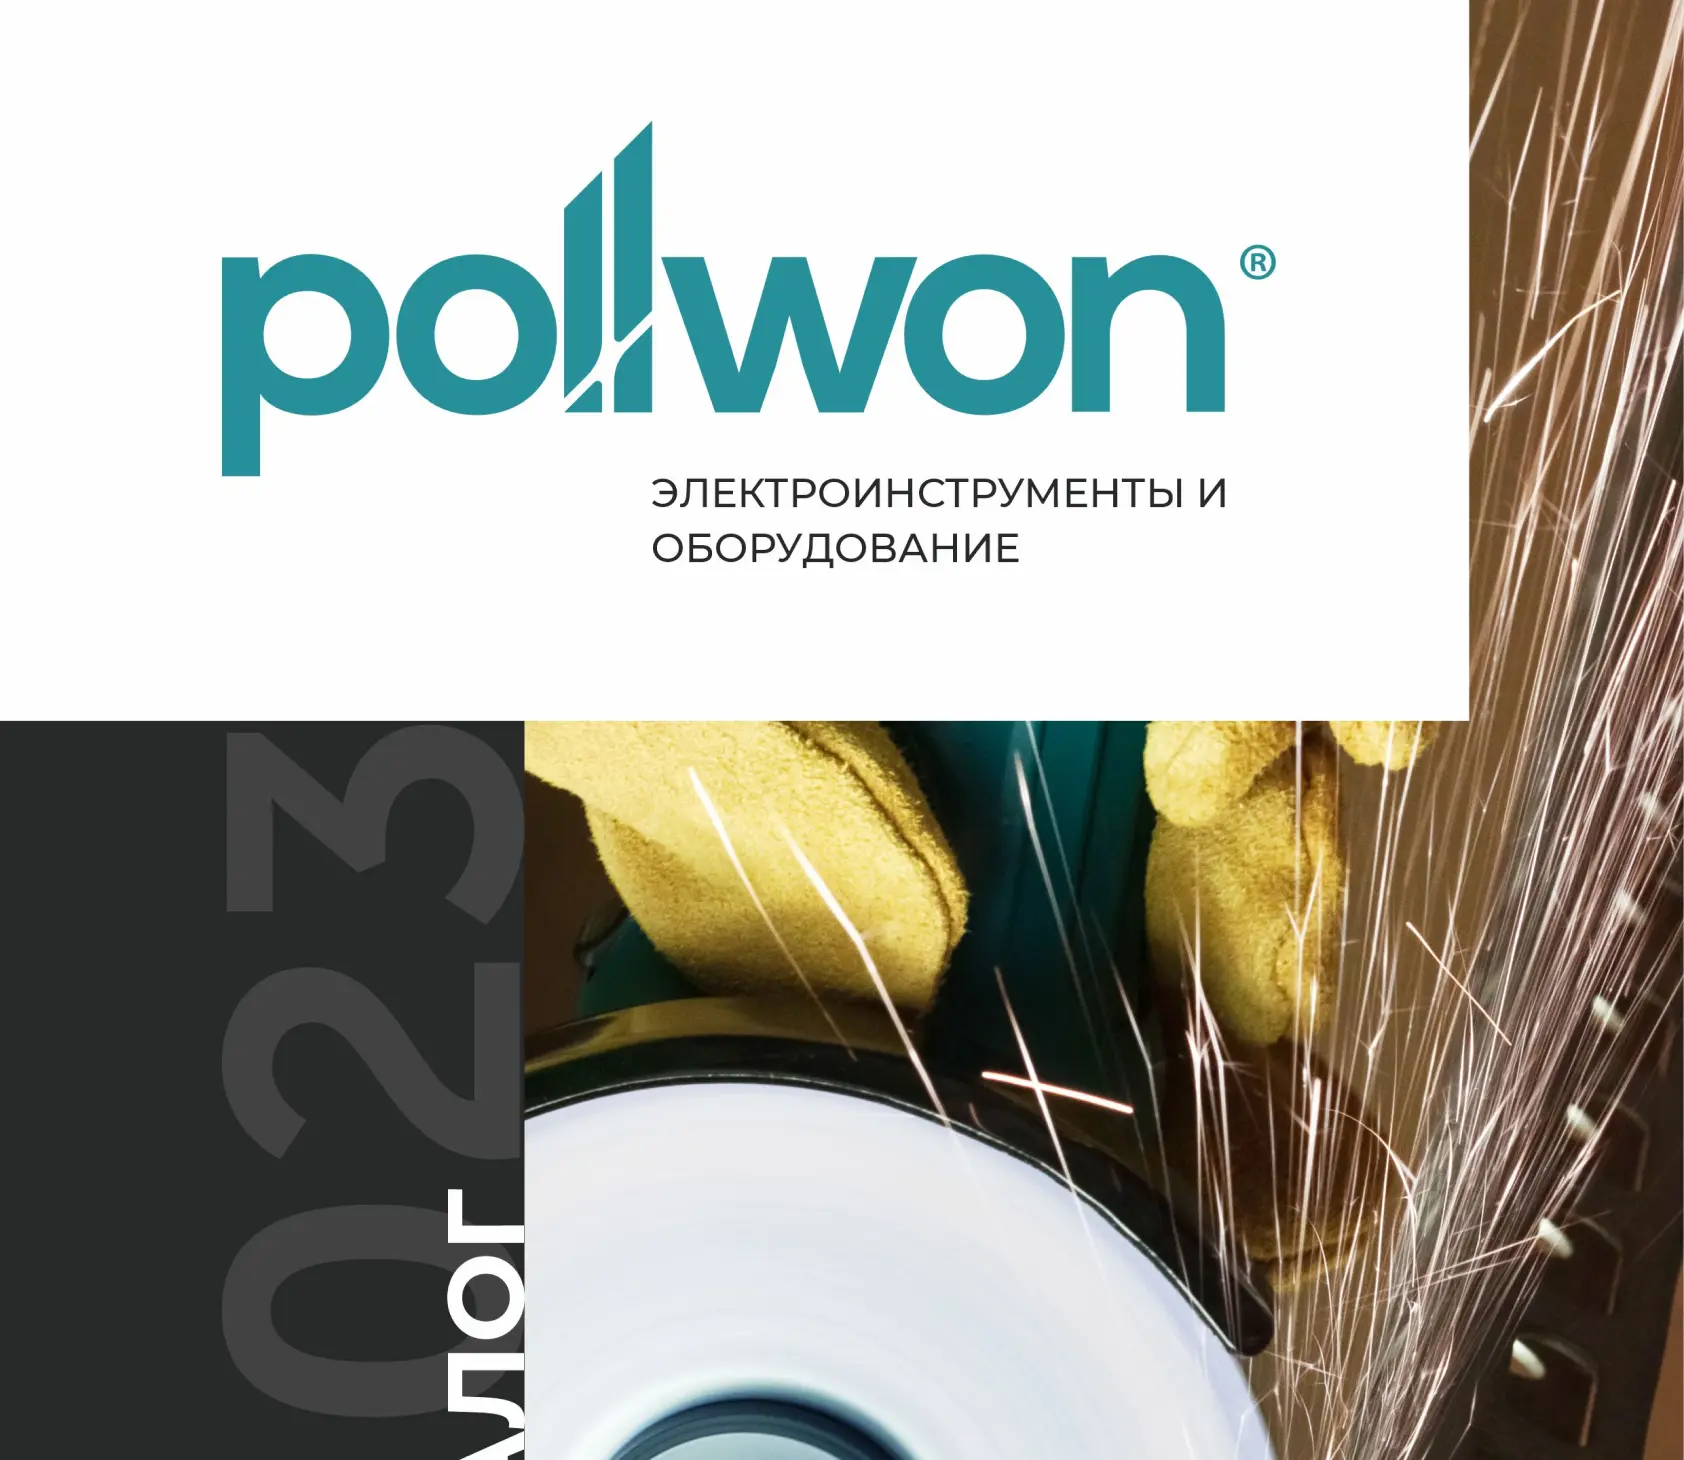 pollwon